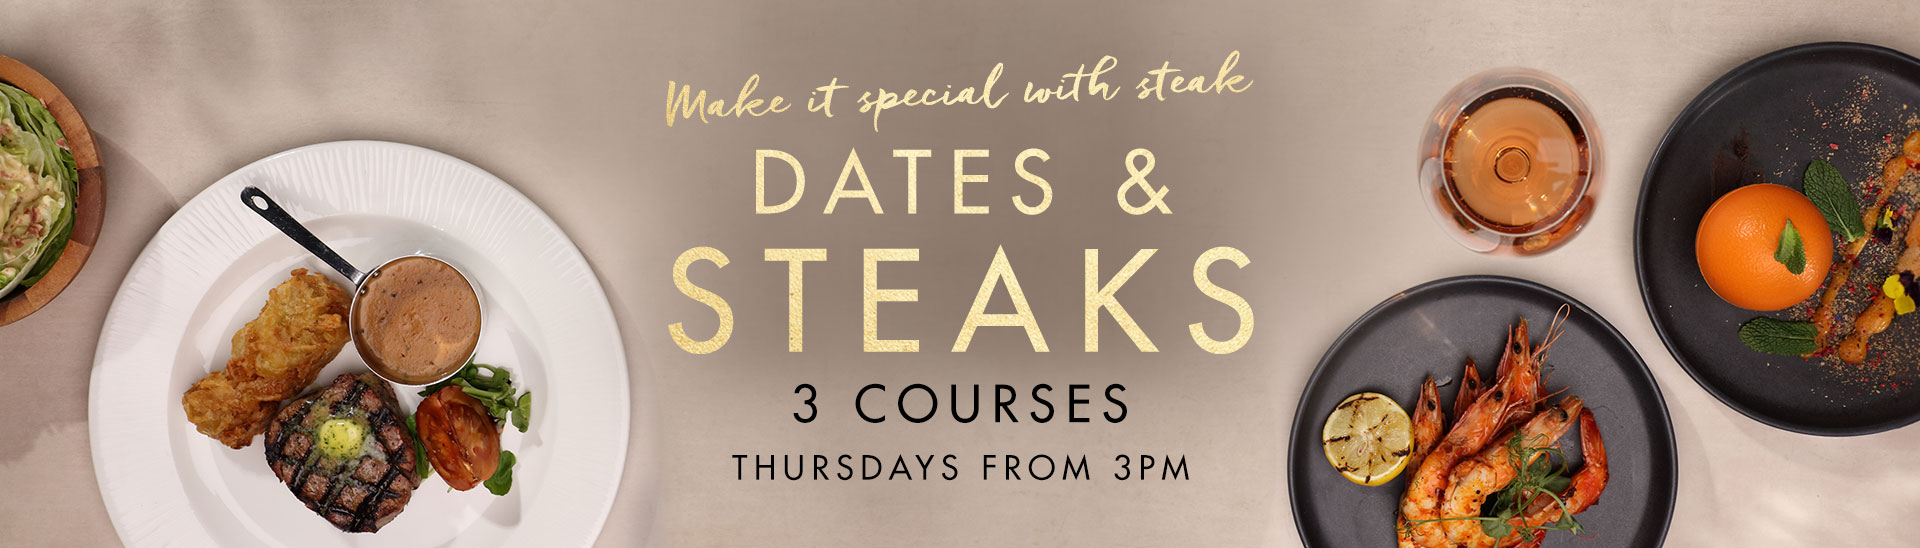 Dates & Steaks at Miller & Carter Poole